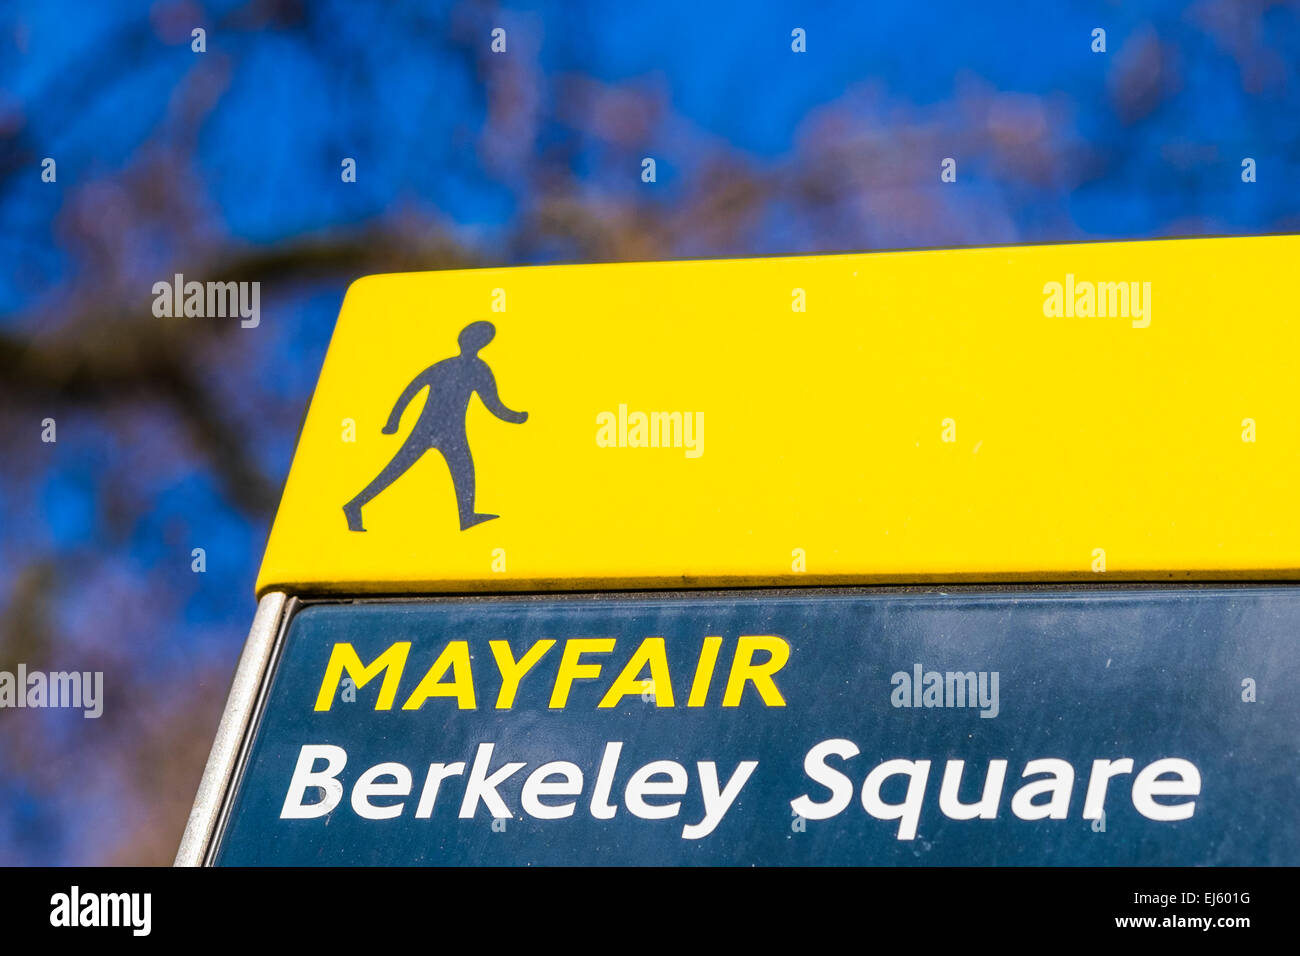 Berkeley Square Mayfair sign - London Stock Photo